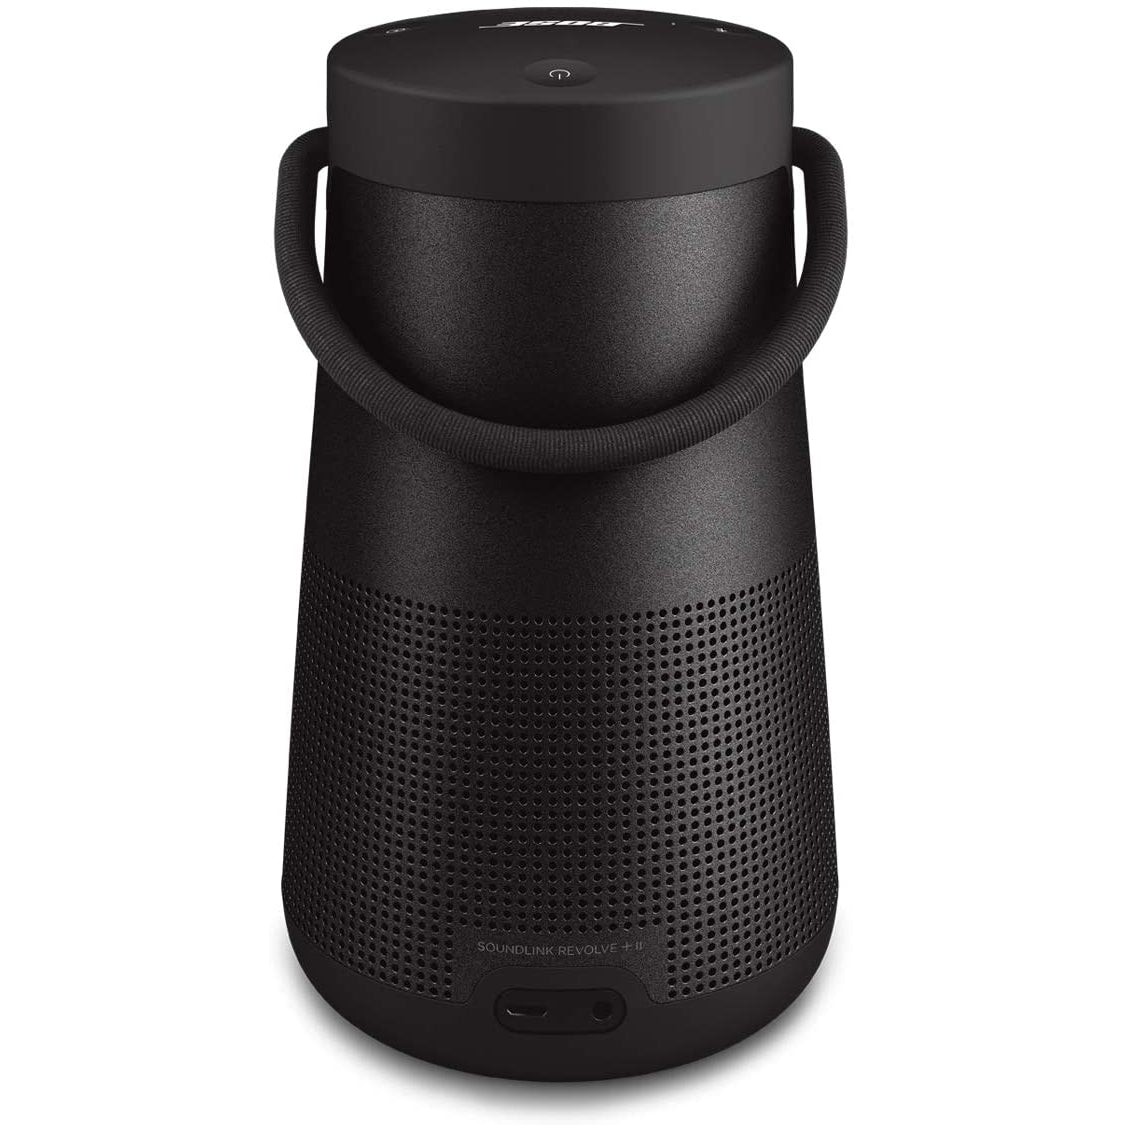 Bose SoundLink Revolve+ (Series II) Portable Bluetooth Speaker - Black